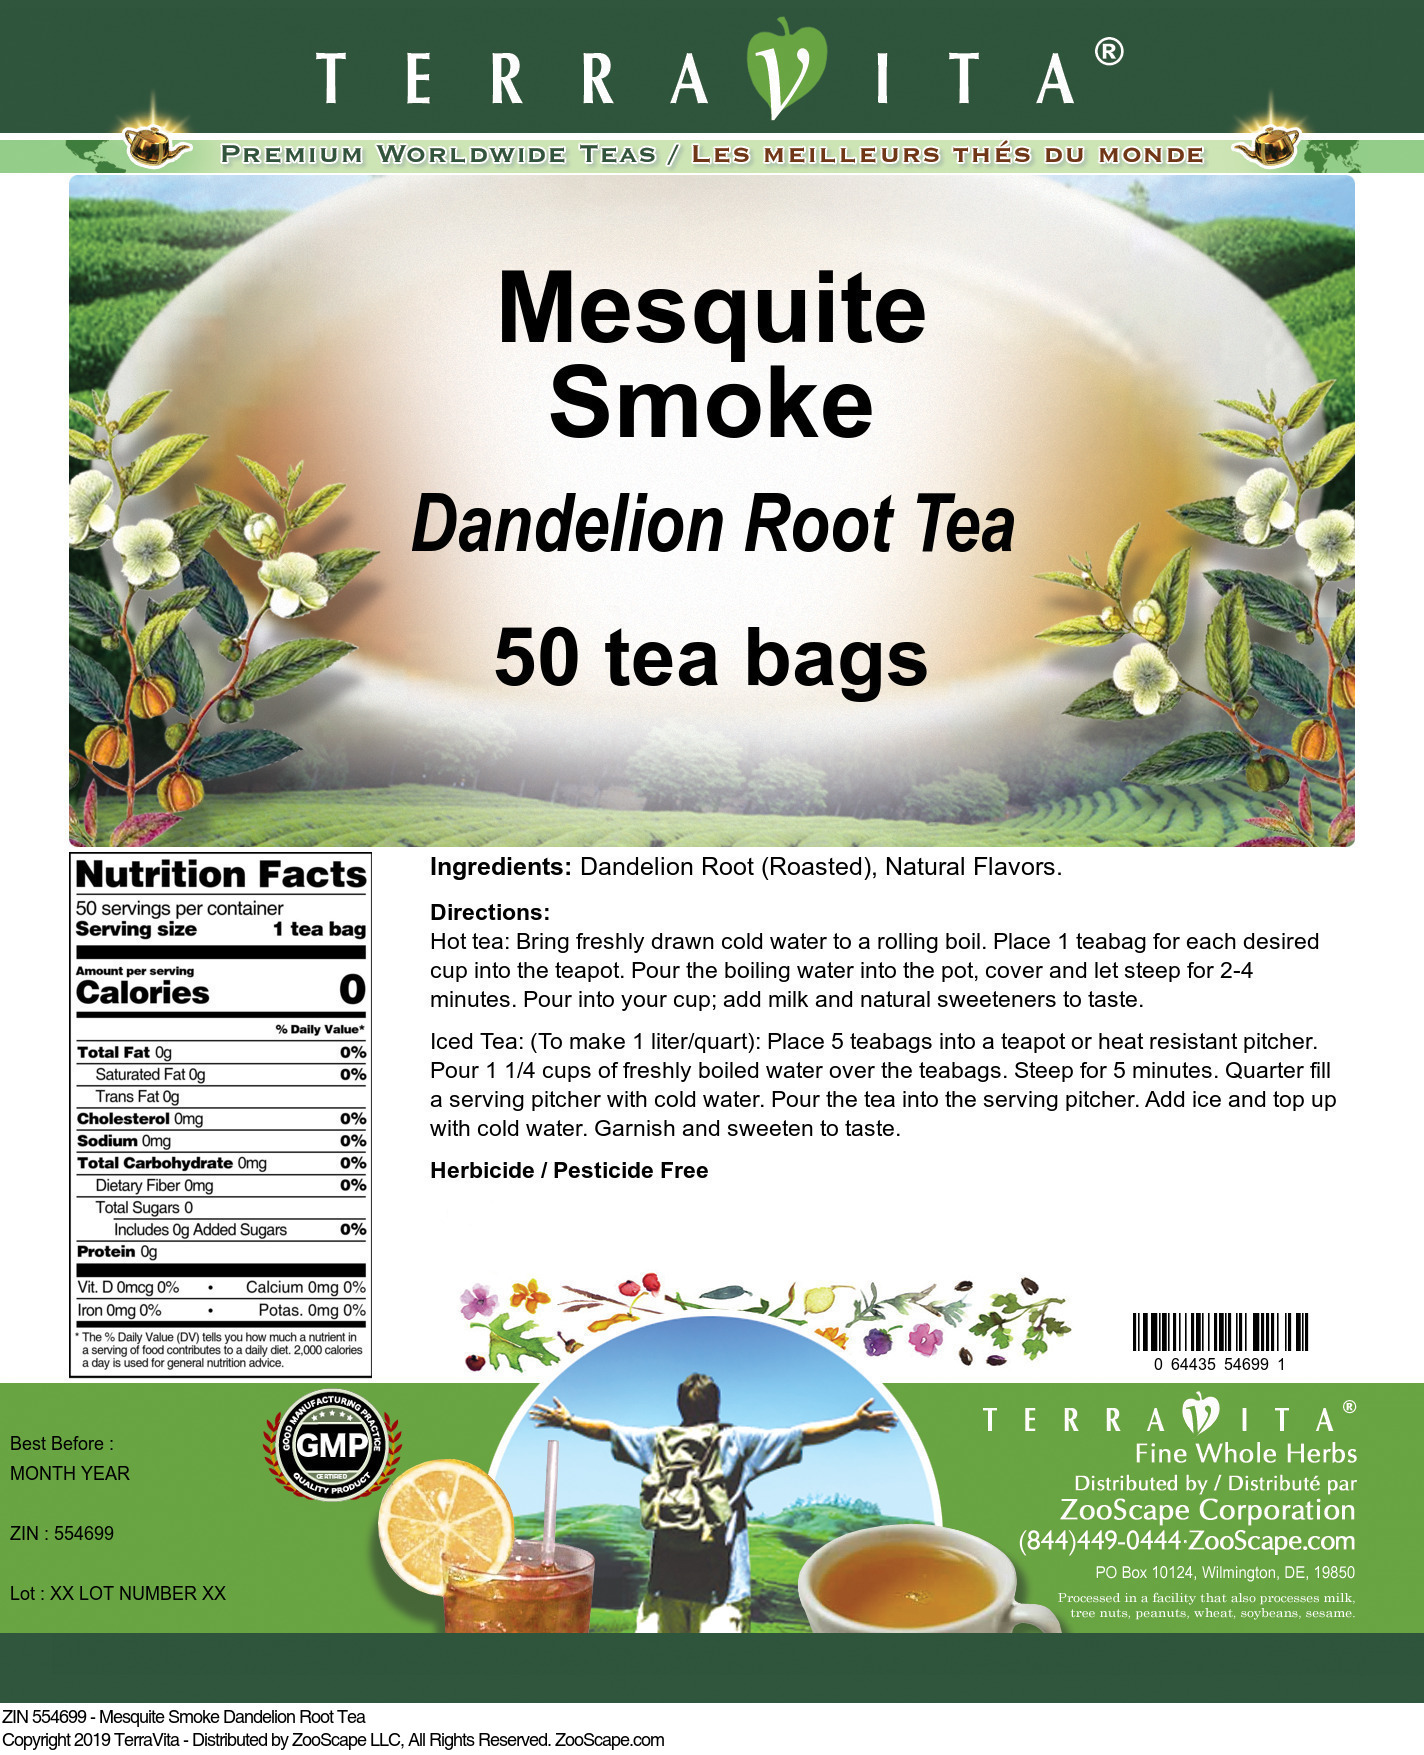 Mesquite Smoke Dandelion Root Tea - Label